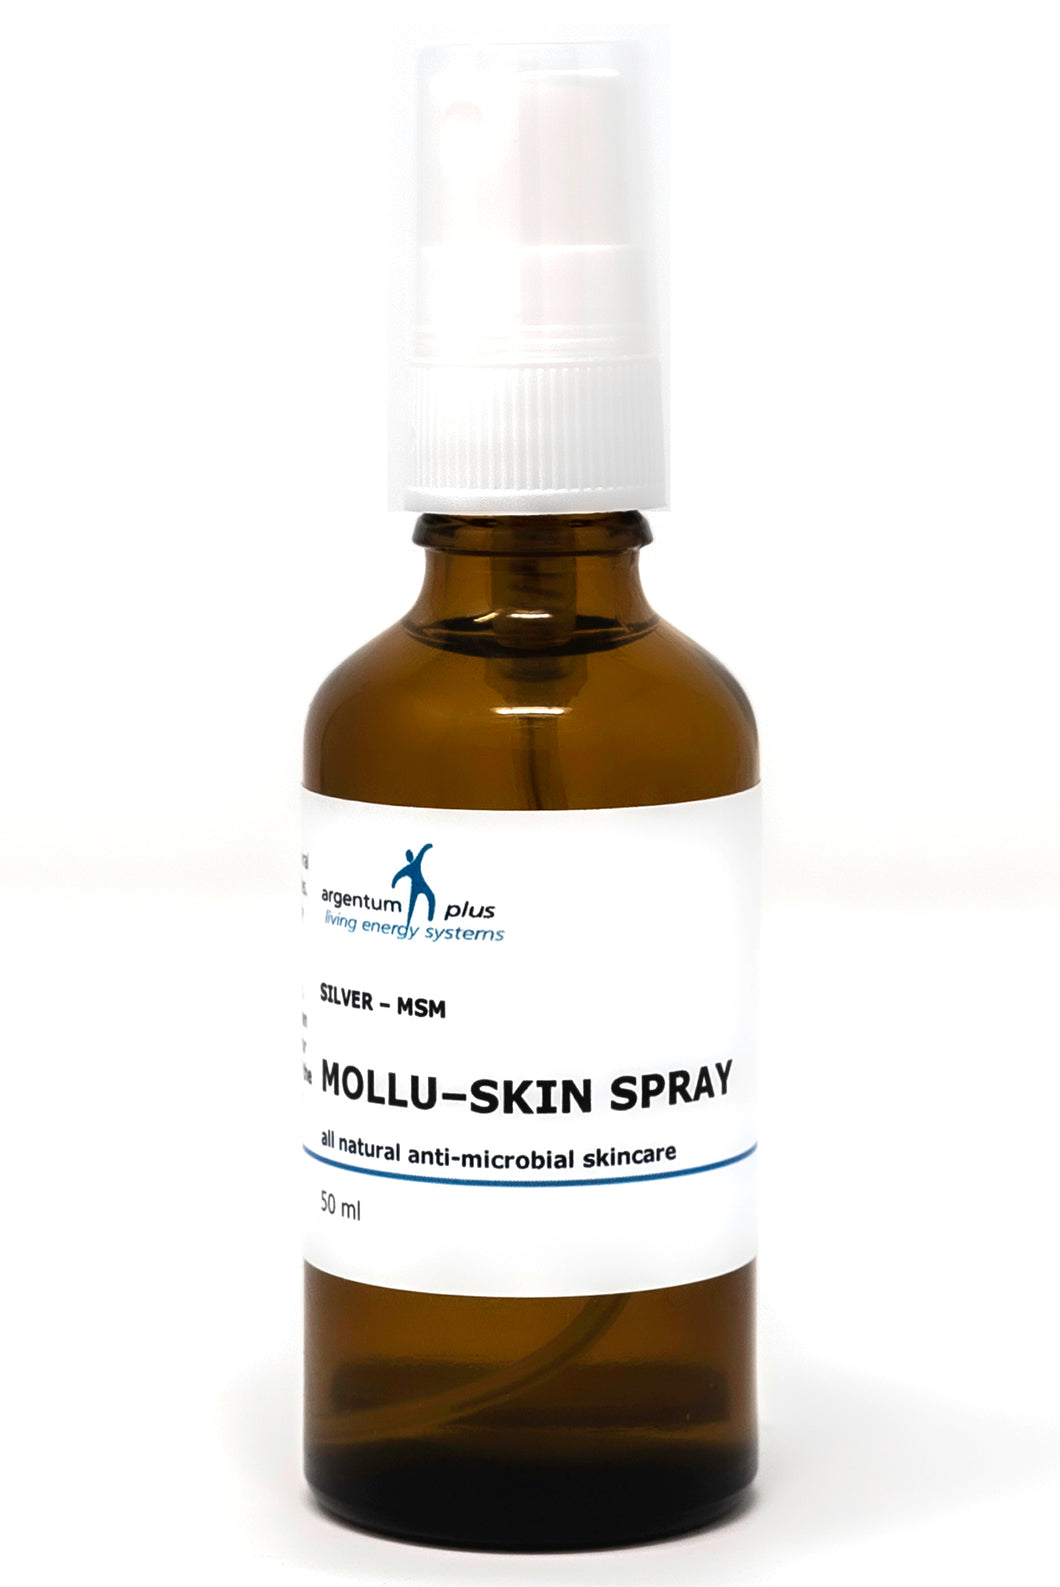 Silver-MSM Mollu-Skin Spray Non-fragranced (2 size options)